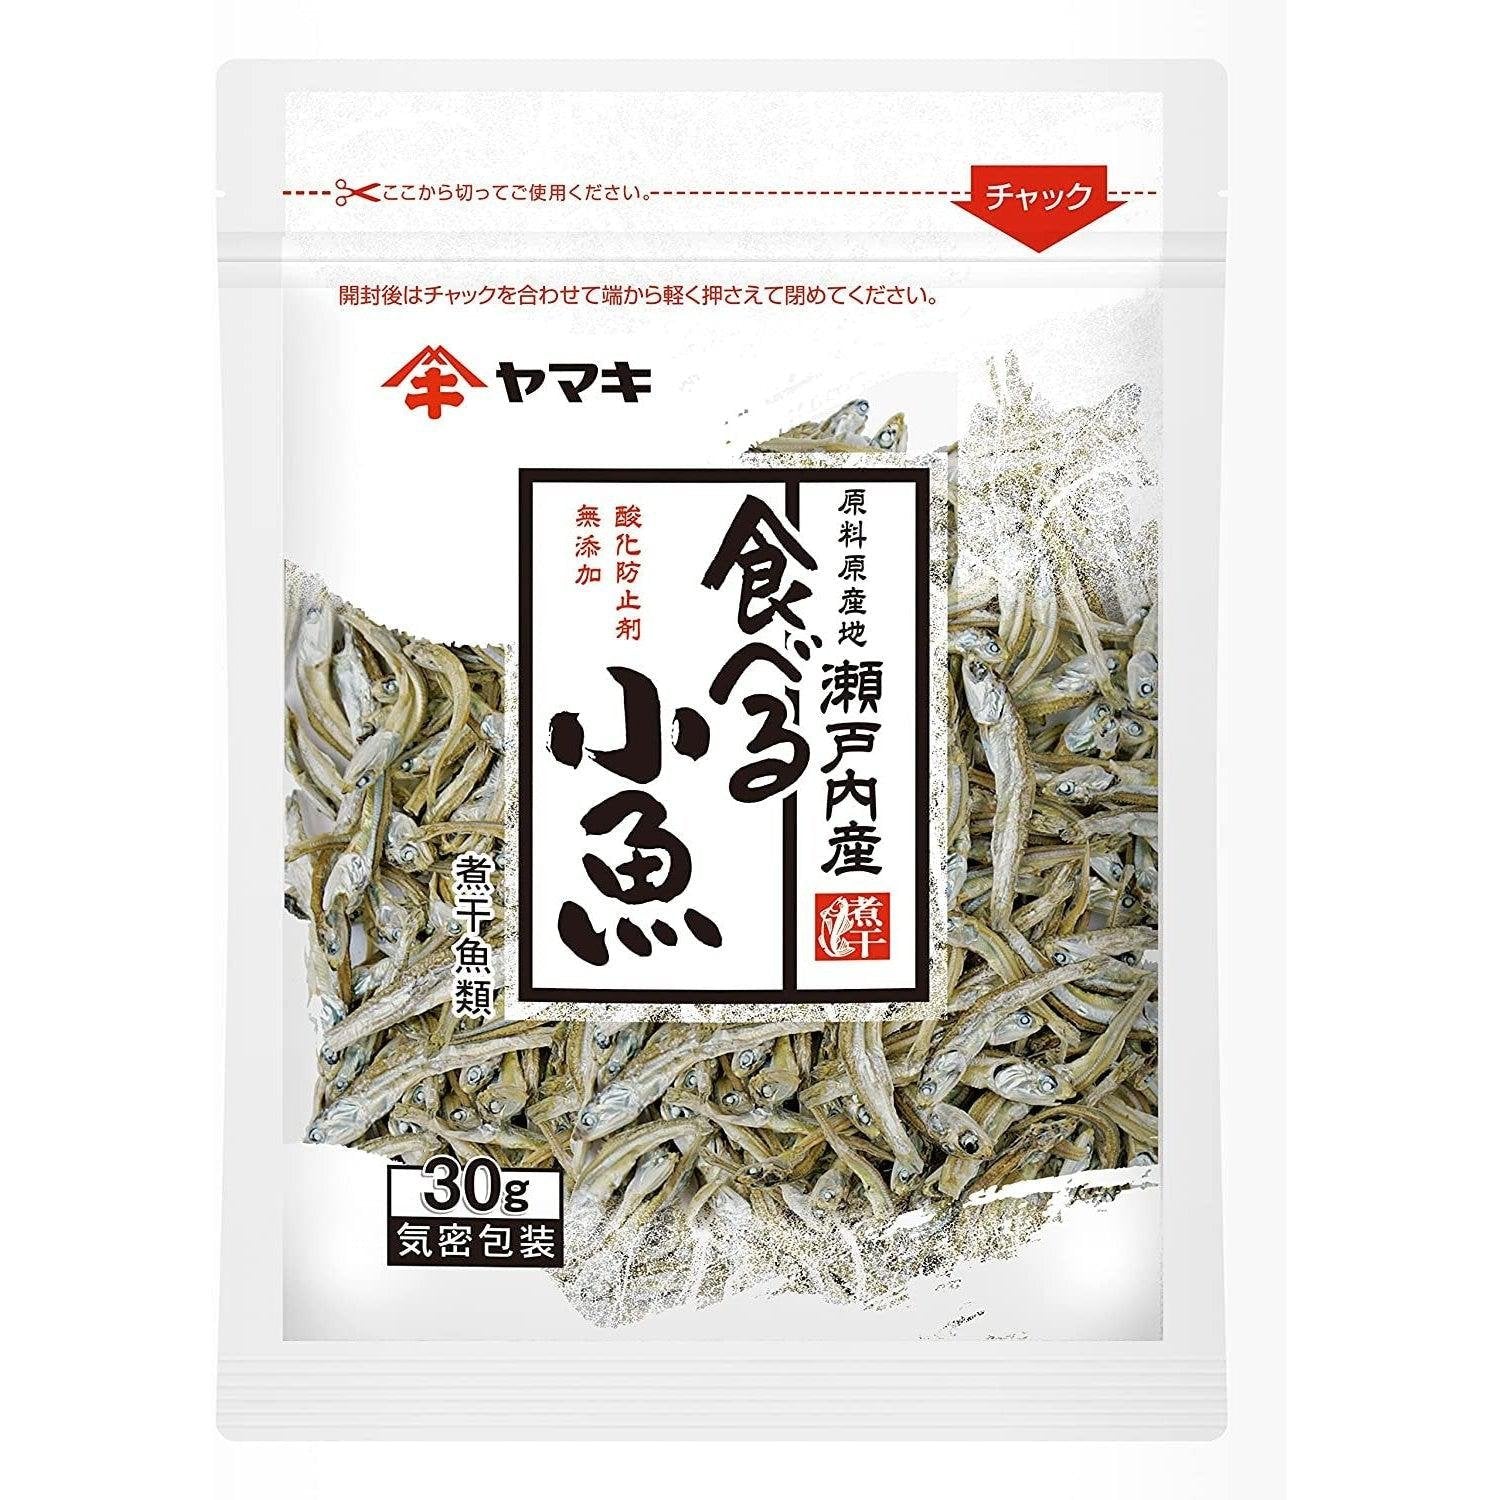 P-1-YMKI-DRIFSH-40-Yamaki Dried Anchovy Additive-Free Dried Japanese Fish Snack 30g.jpg